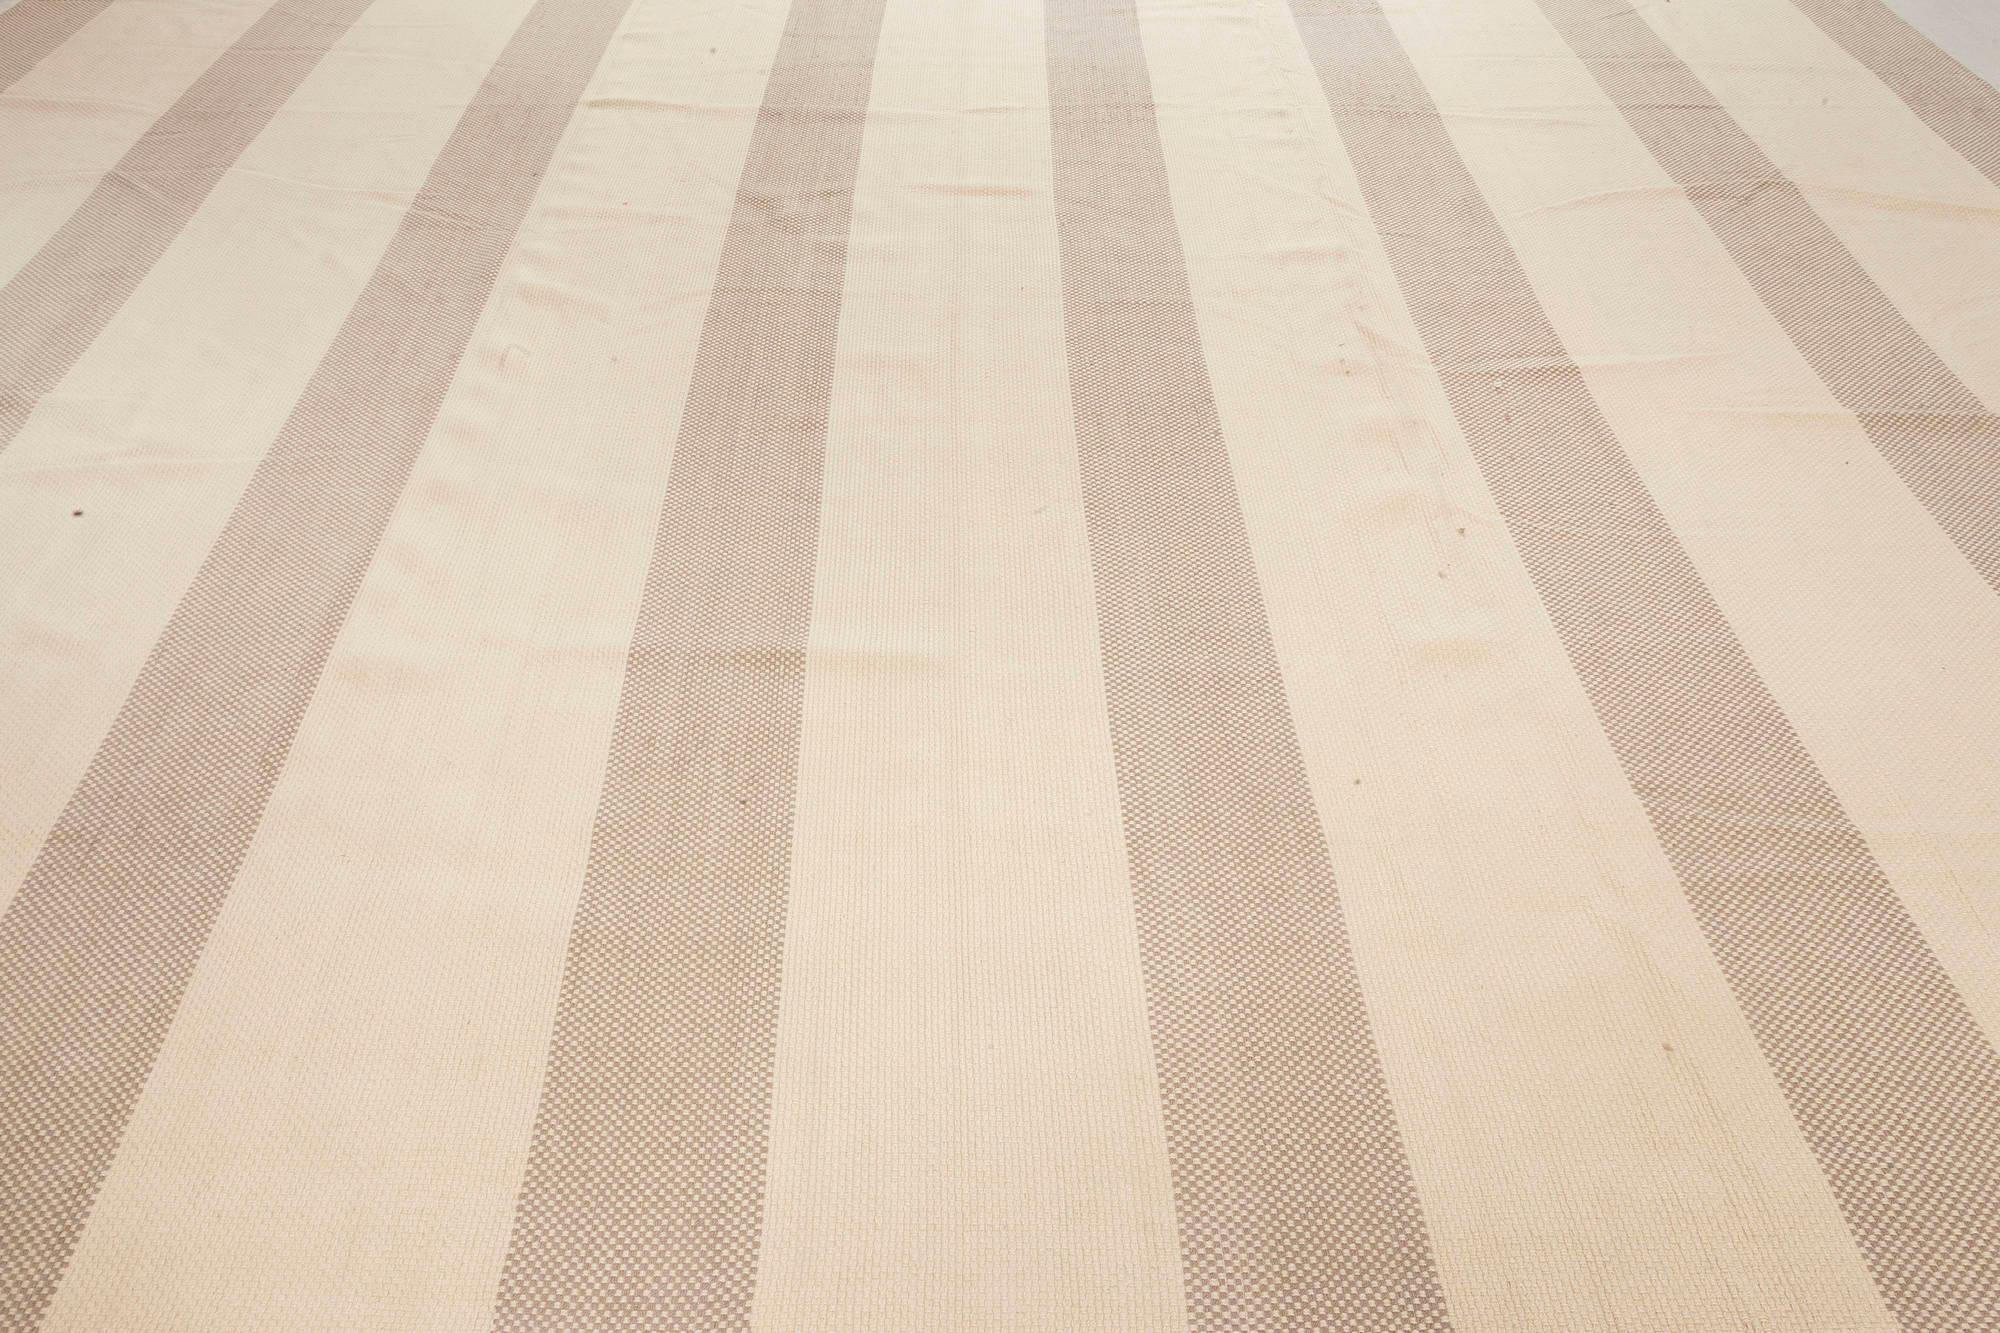 Oversized modern striped beige and grey flat weave rug by Doris Leslie Blau.
Size: 16'1